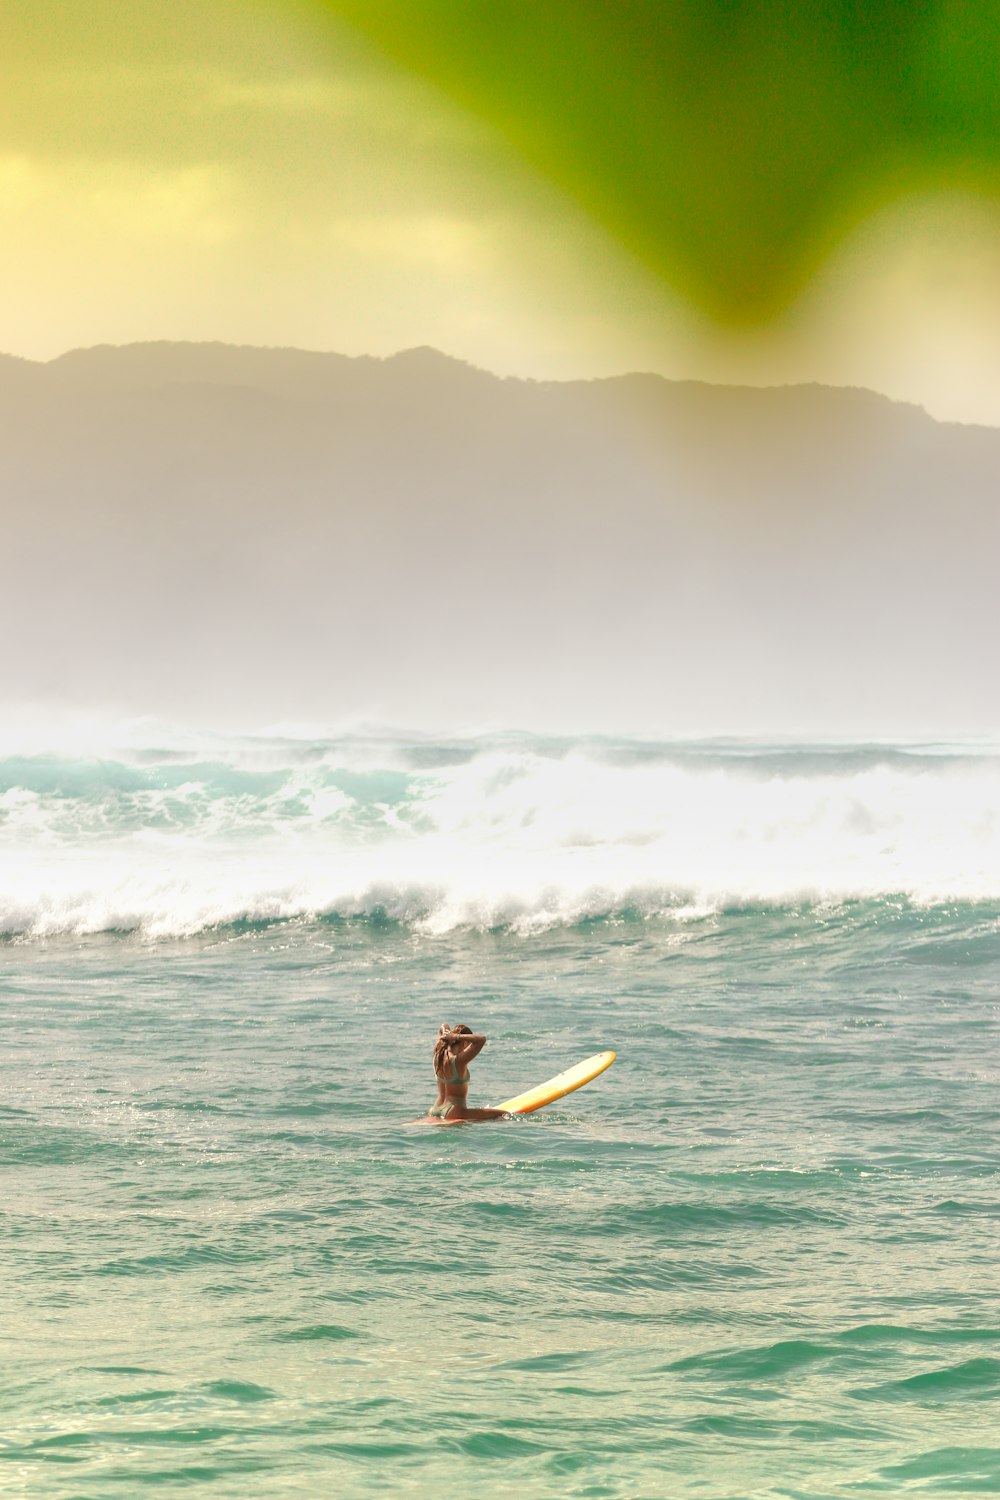 woman in black bikini surfing on sea waves during daytime